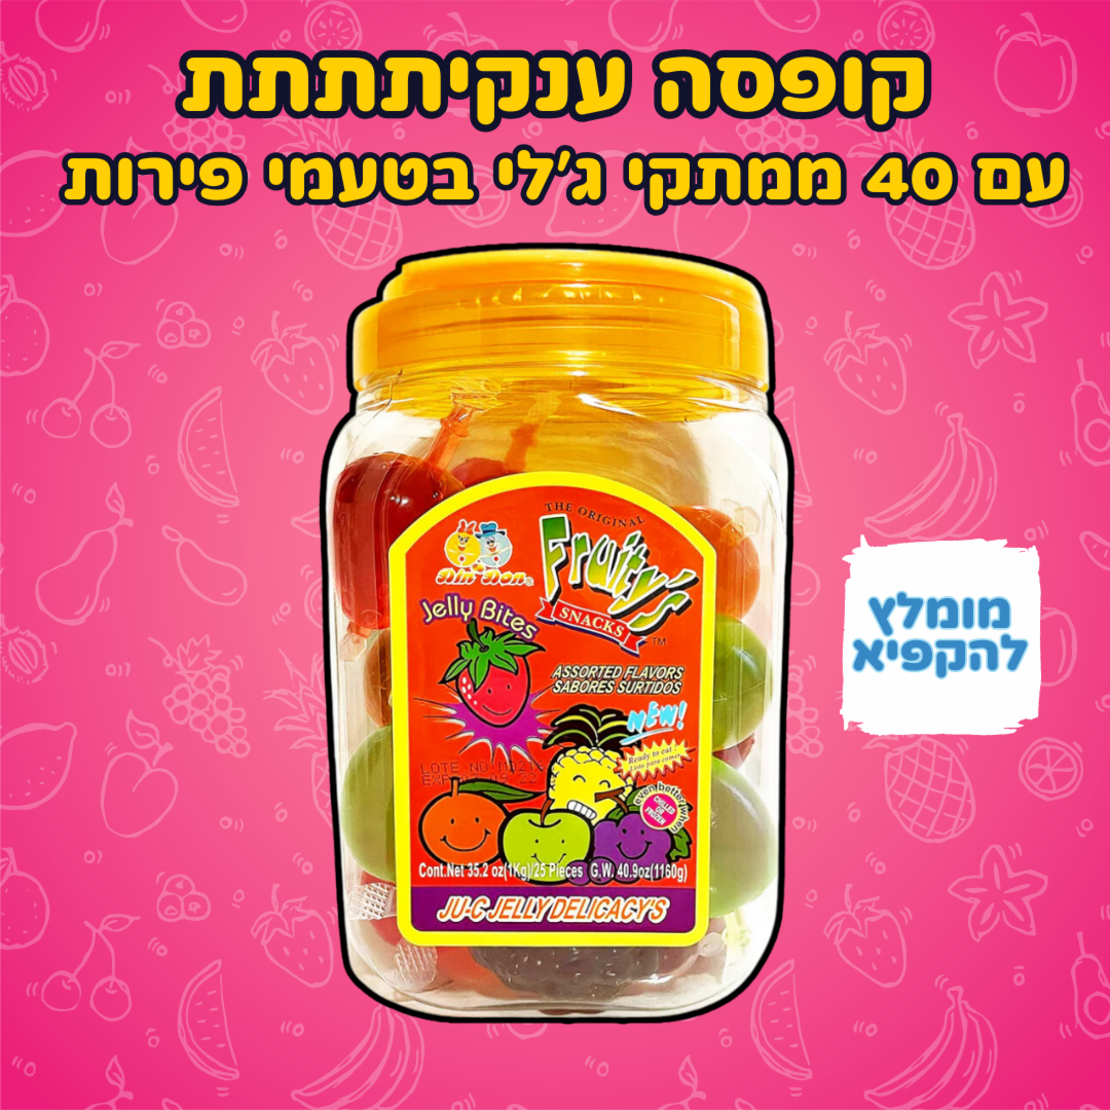 Fruity's Jelly Bites ממתקי ג'לי בטעמי פירות - אריזת ענק עם 40 יחידות!